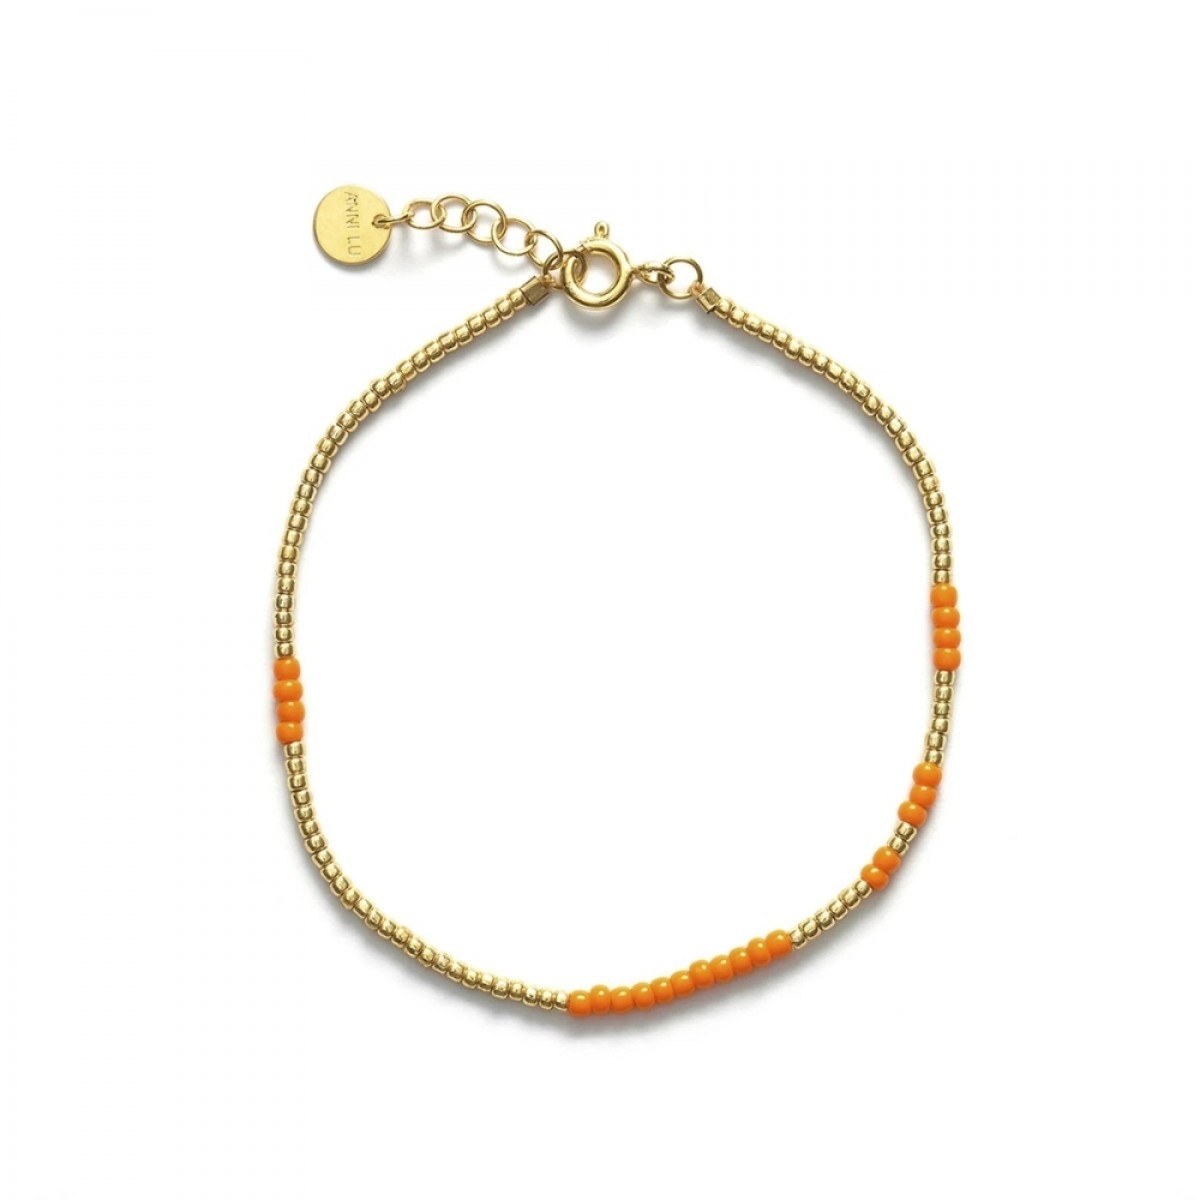 asym bracelet - tangerine